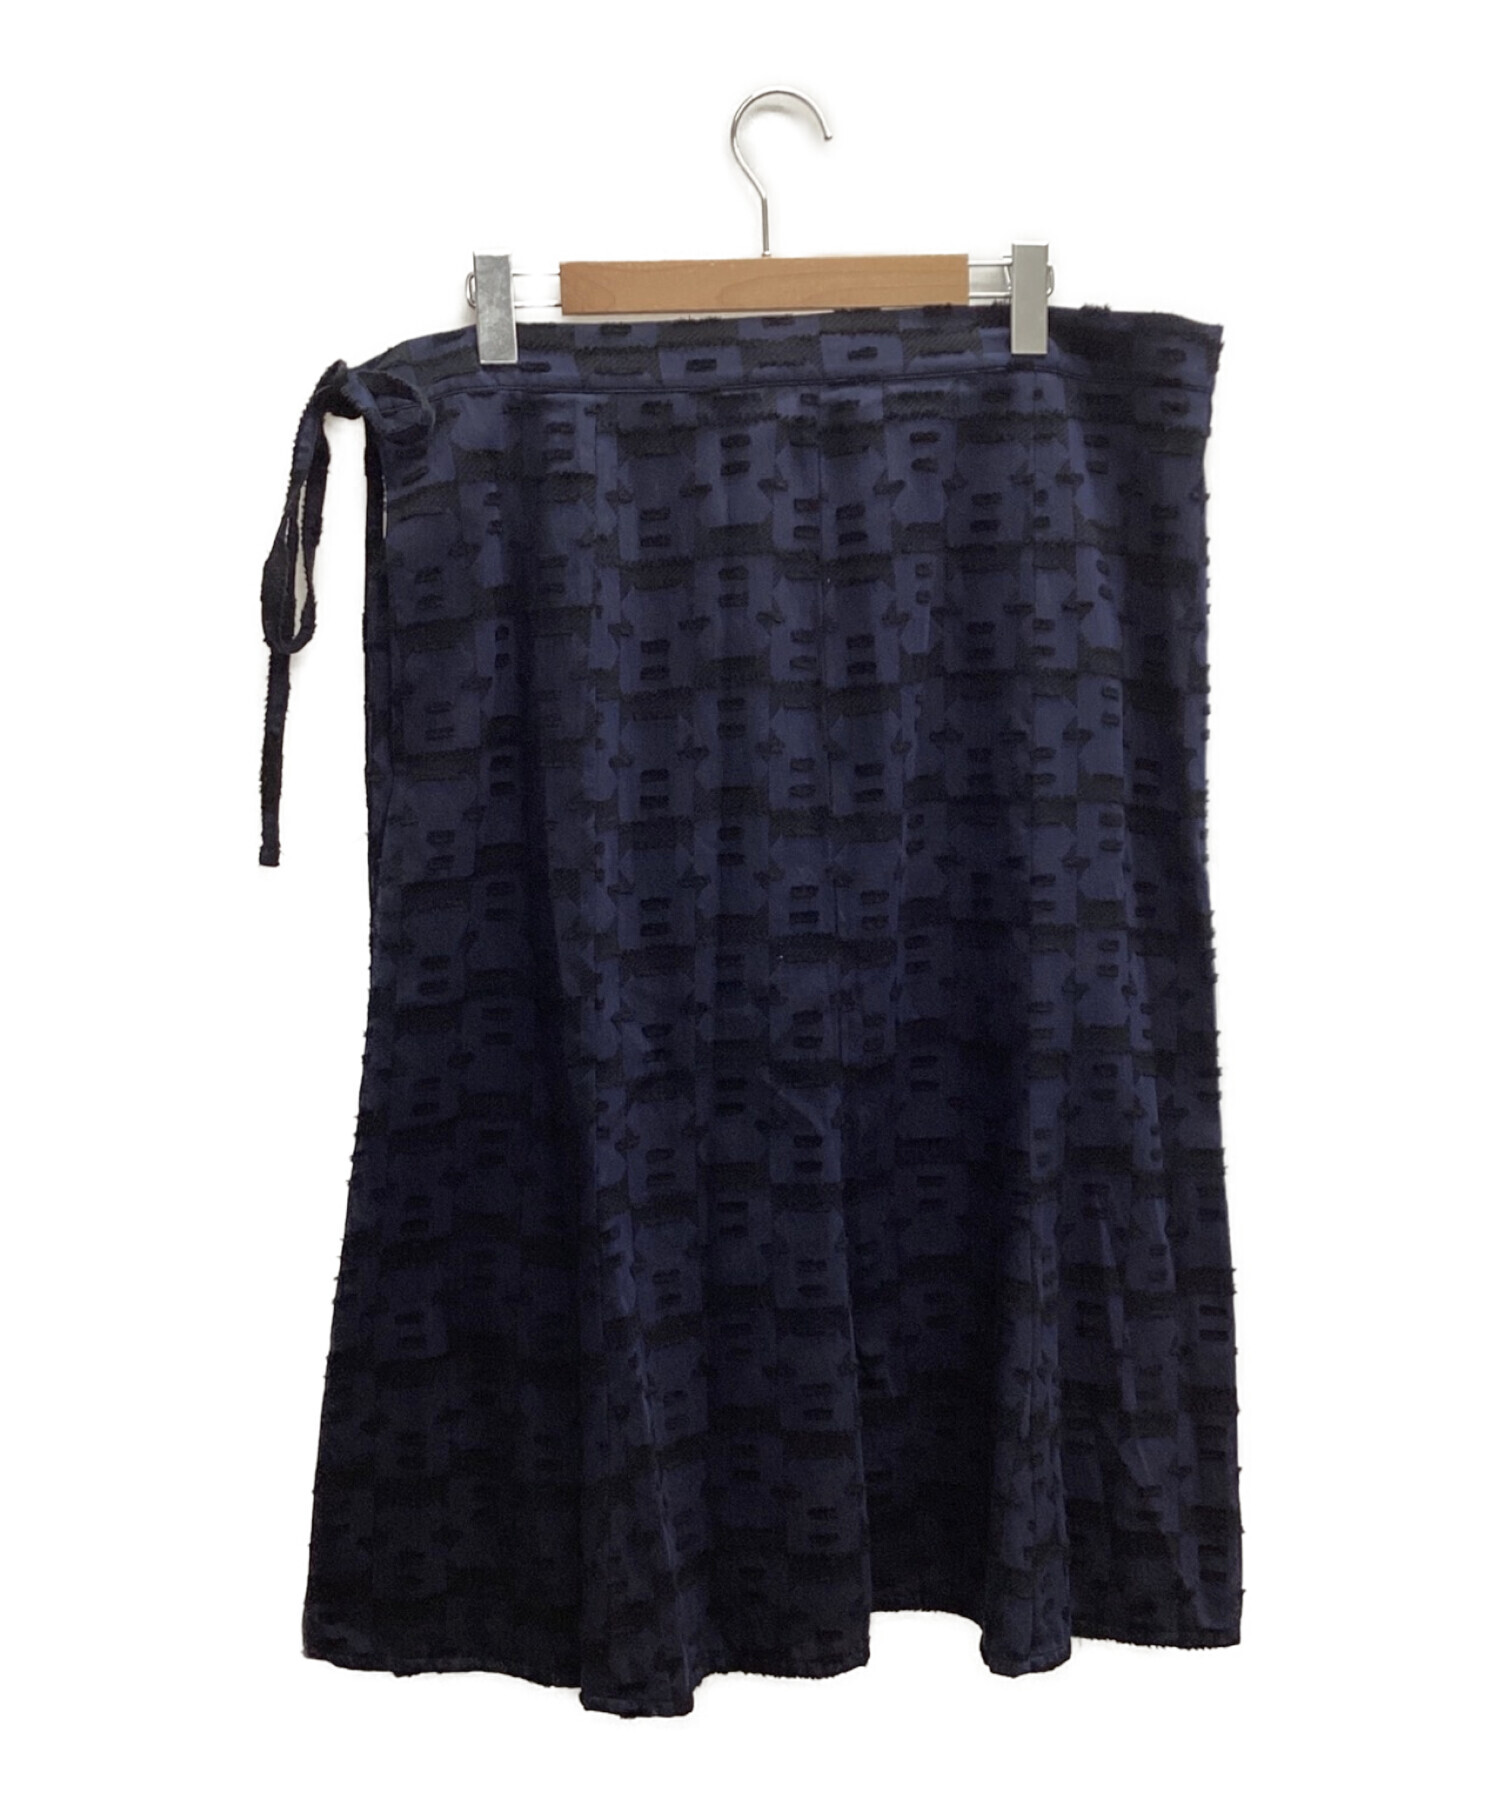 renacnatta (レナクナッタ) Banshu Mermaid Wrap Skirt - Matinee ネイビー サイズ:サイズ表記無し